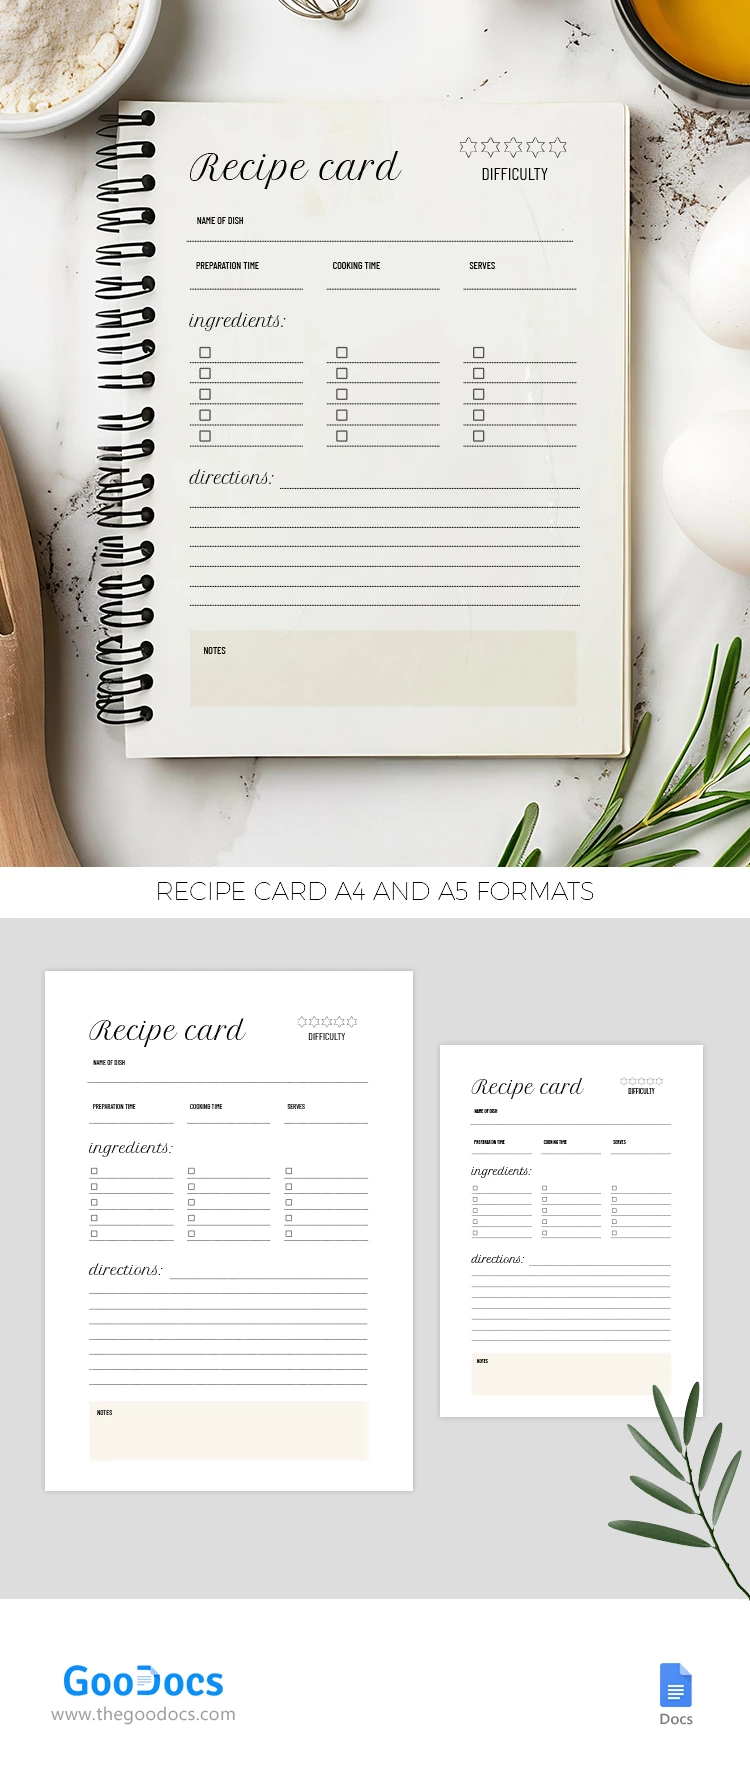 Recipe Card - free Google Docs Template - 10068700